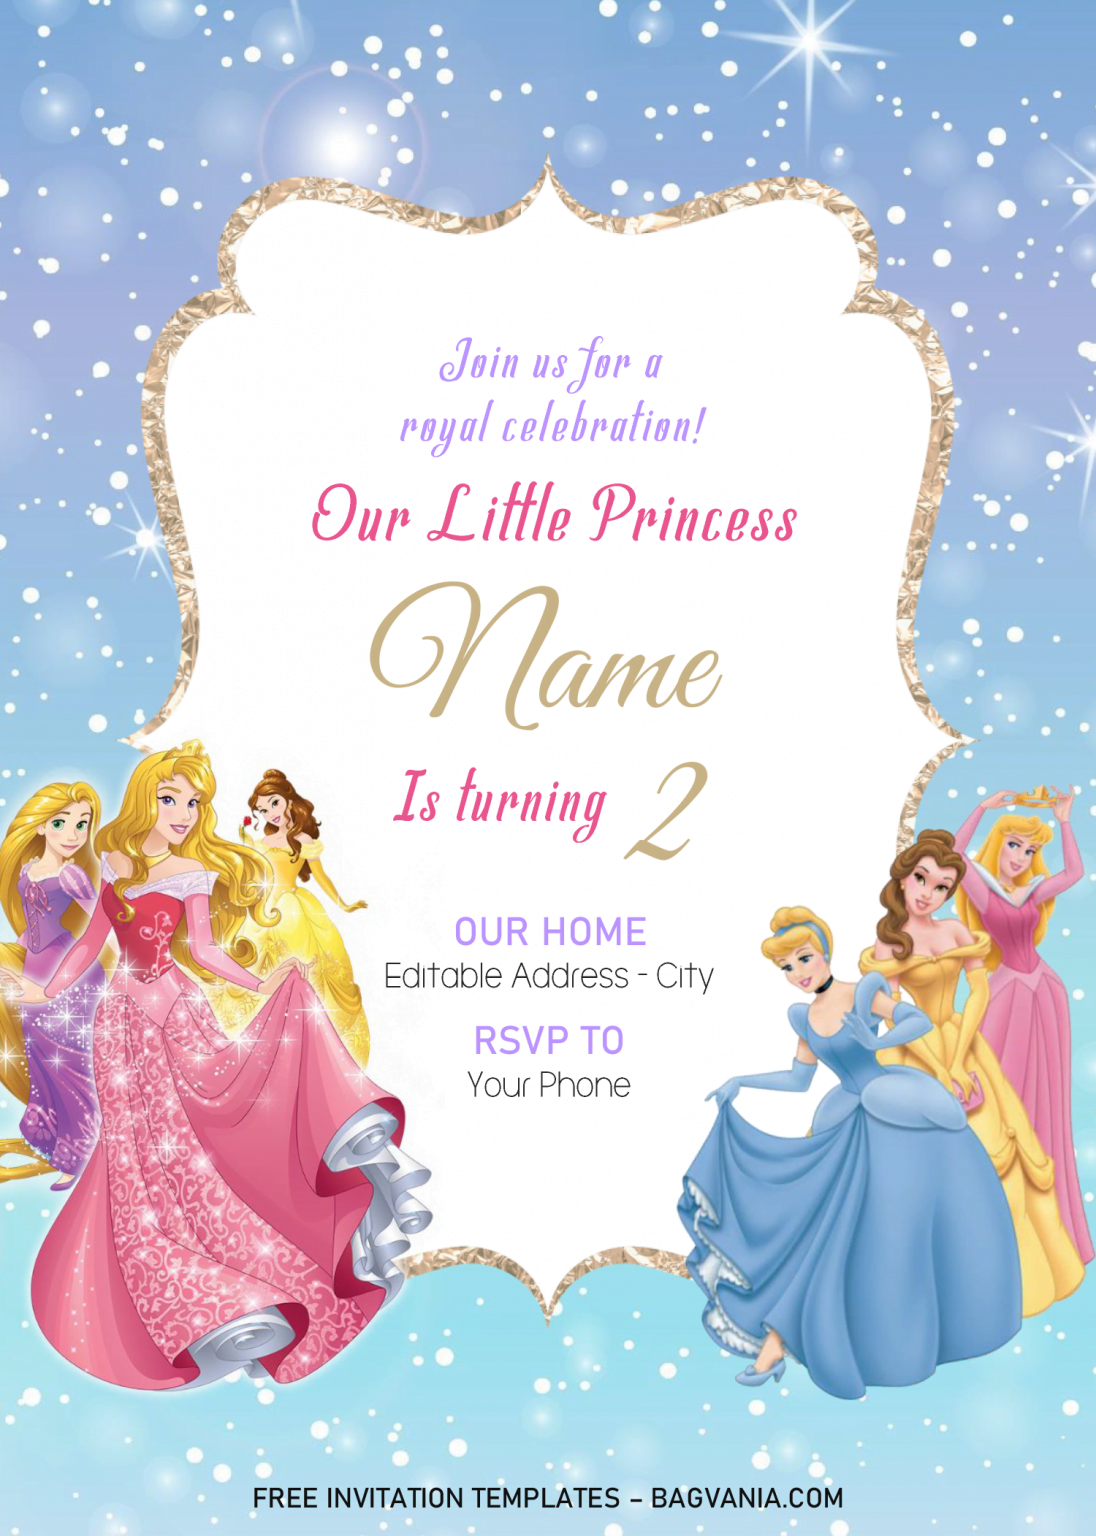 disney-princess-templates-for-invitations